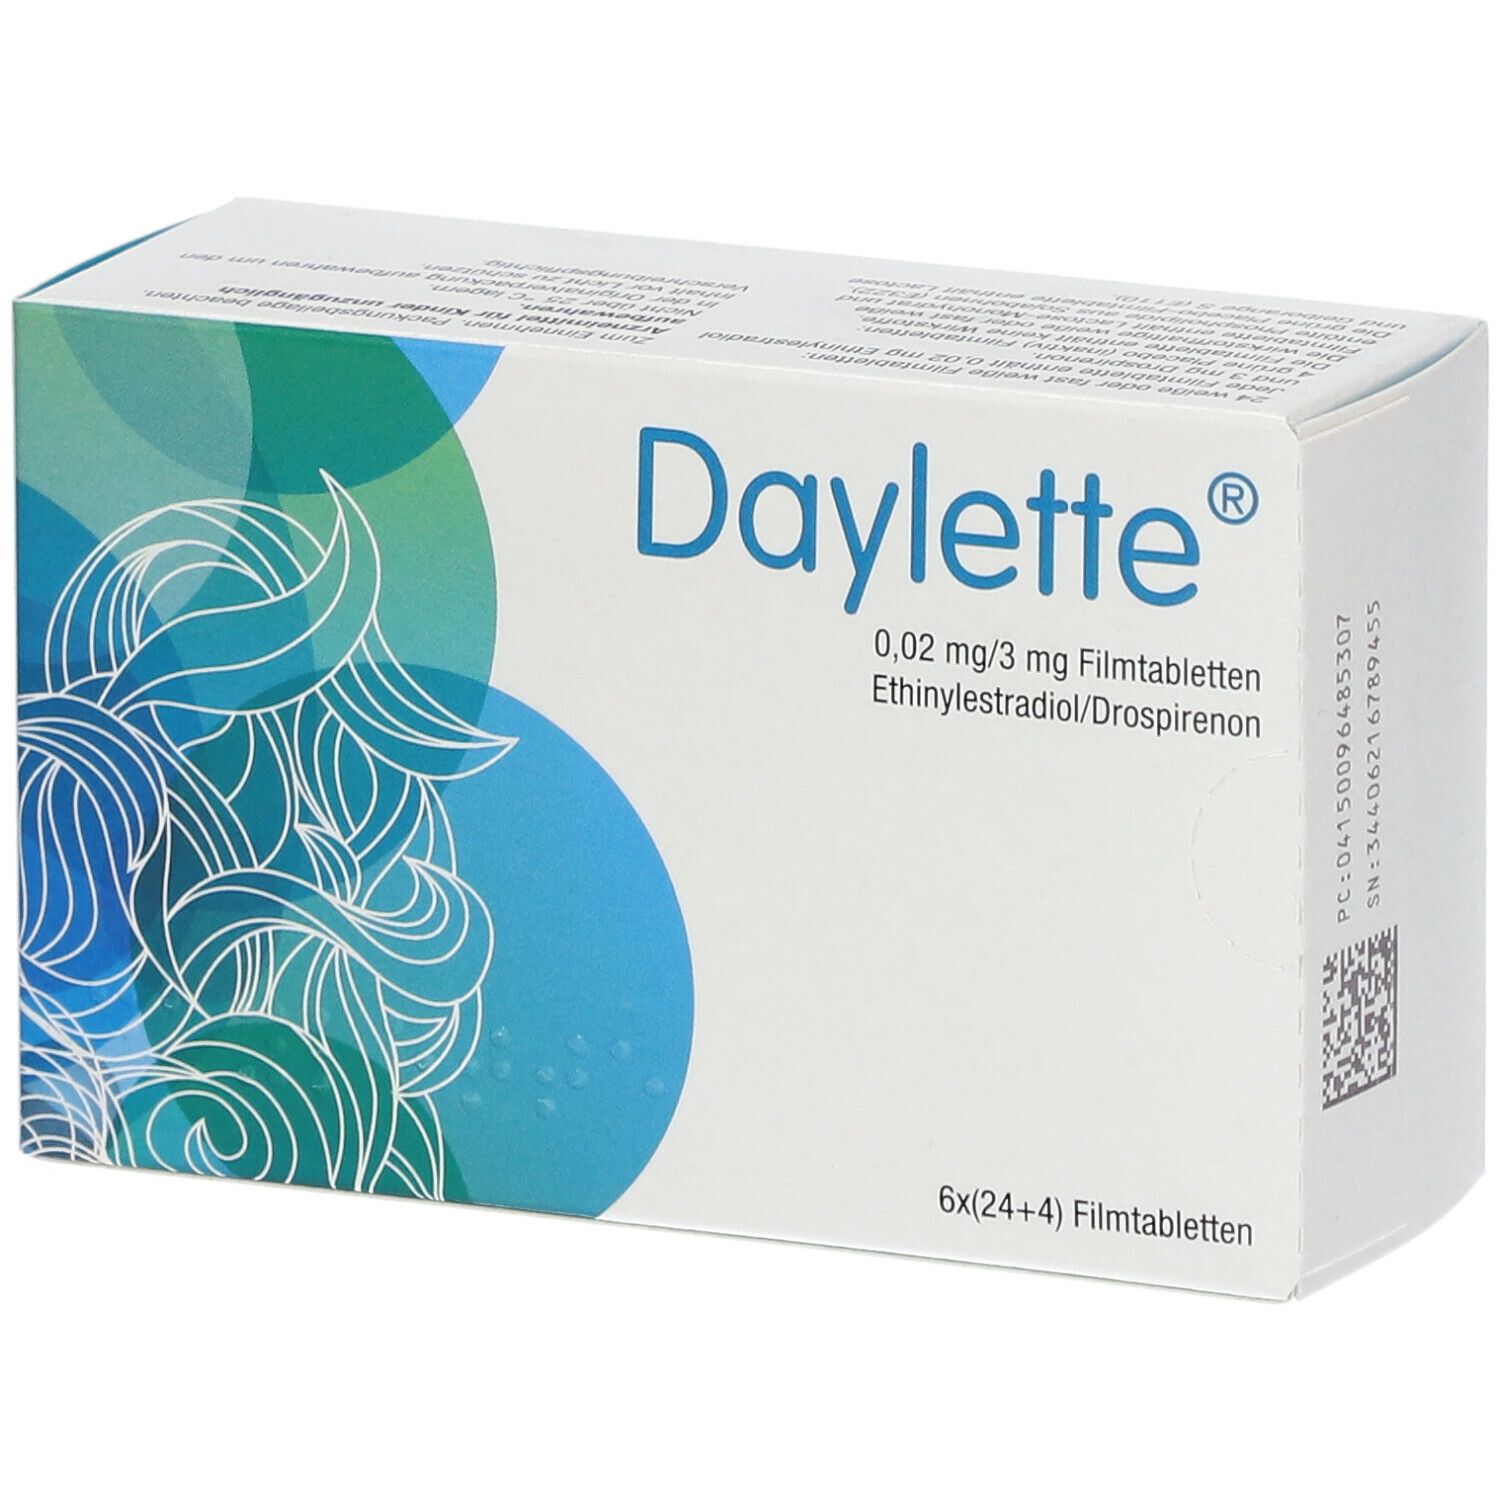 Daylette 0,02 mg/3 mg